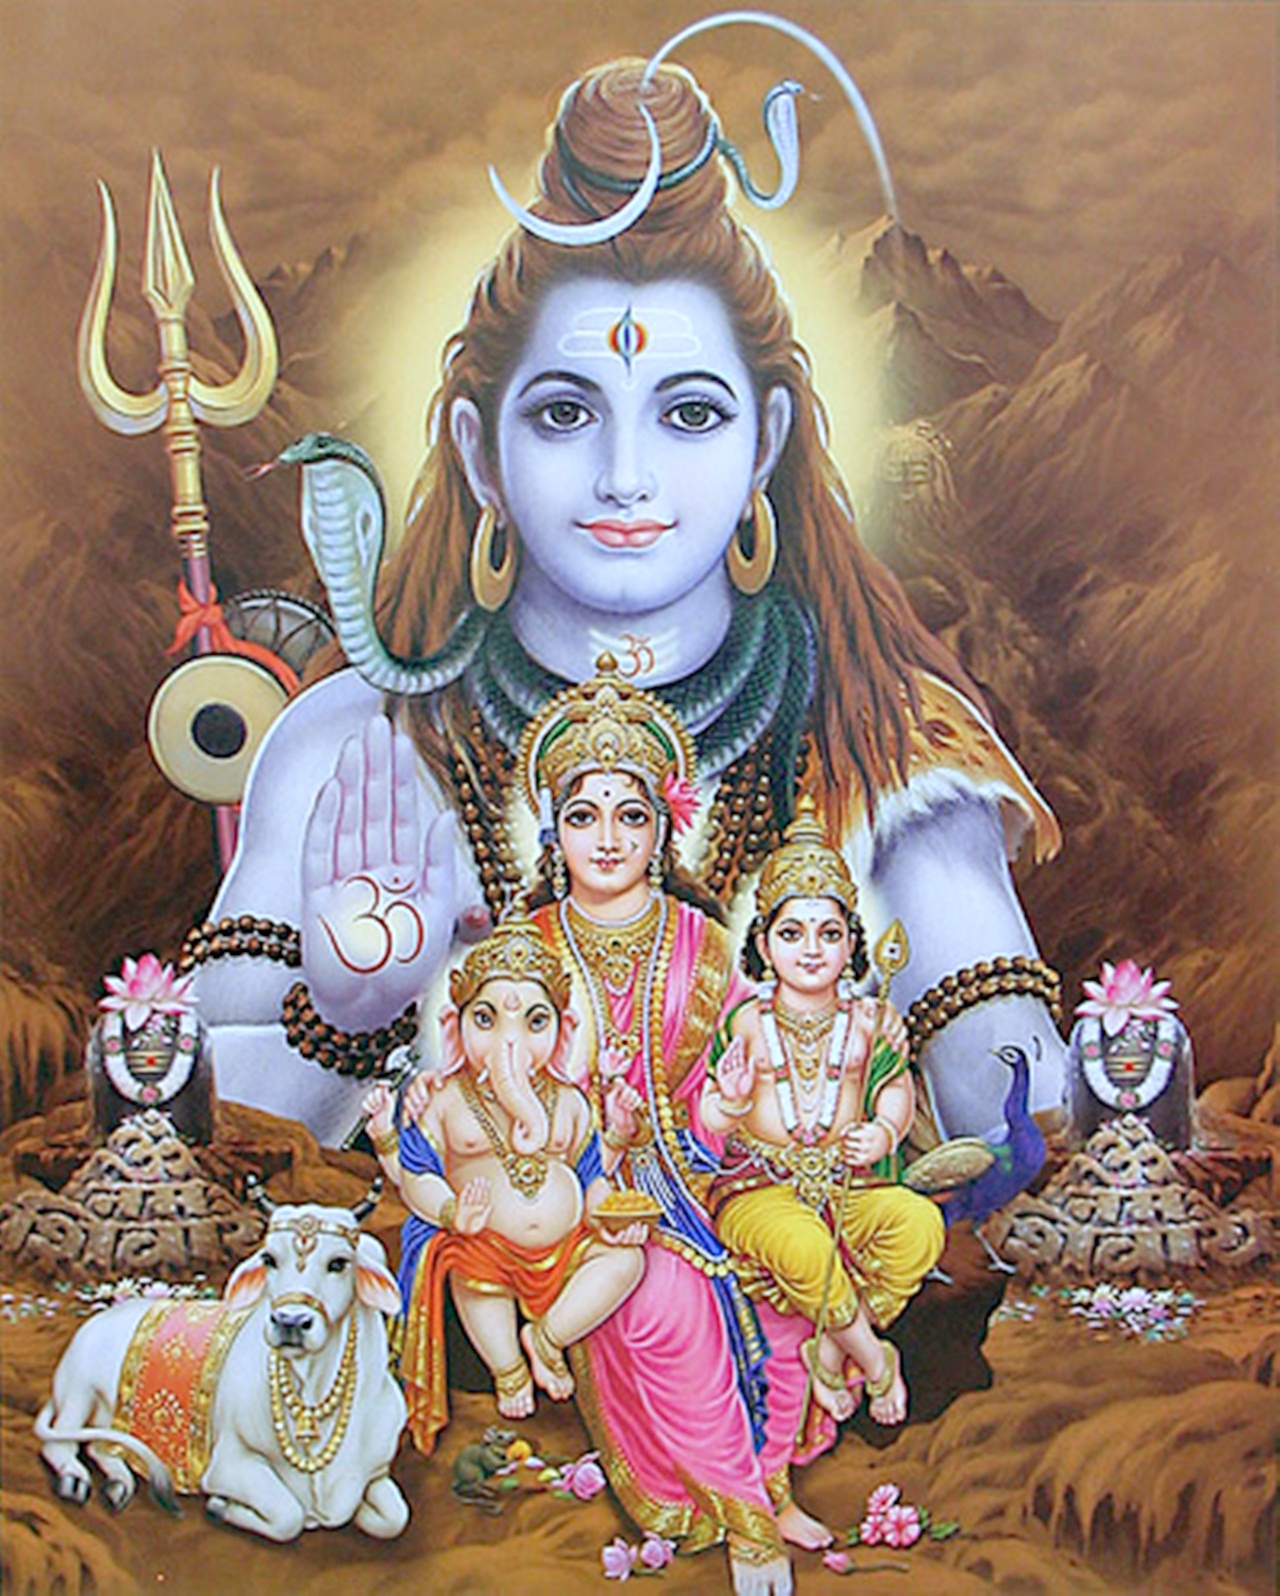 Sivan Images - Lord Shiva